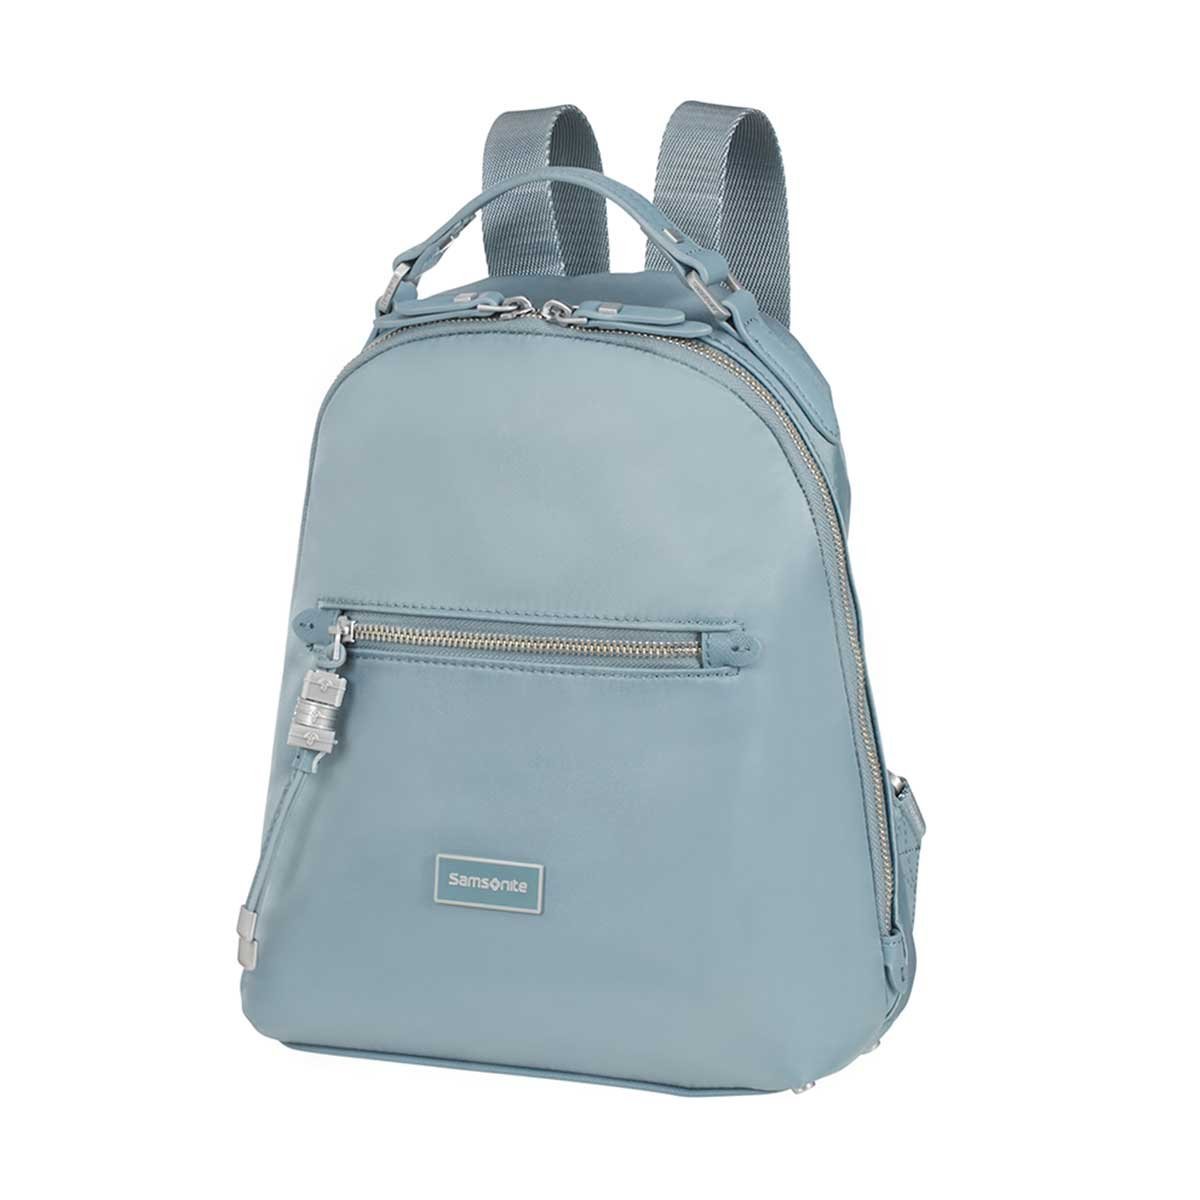 Backpack Dusty Blue Karissa Samsonite